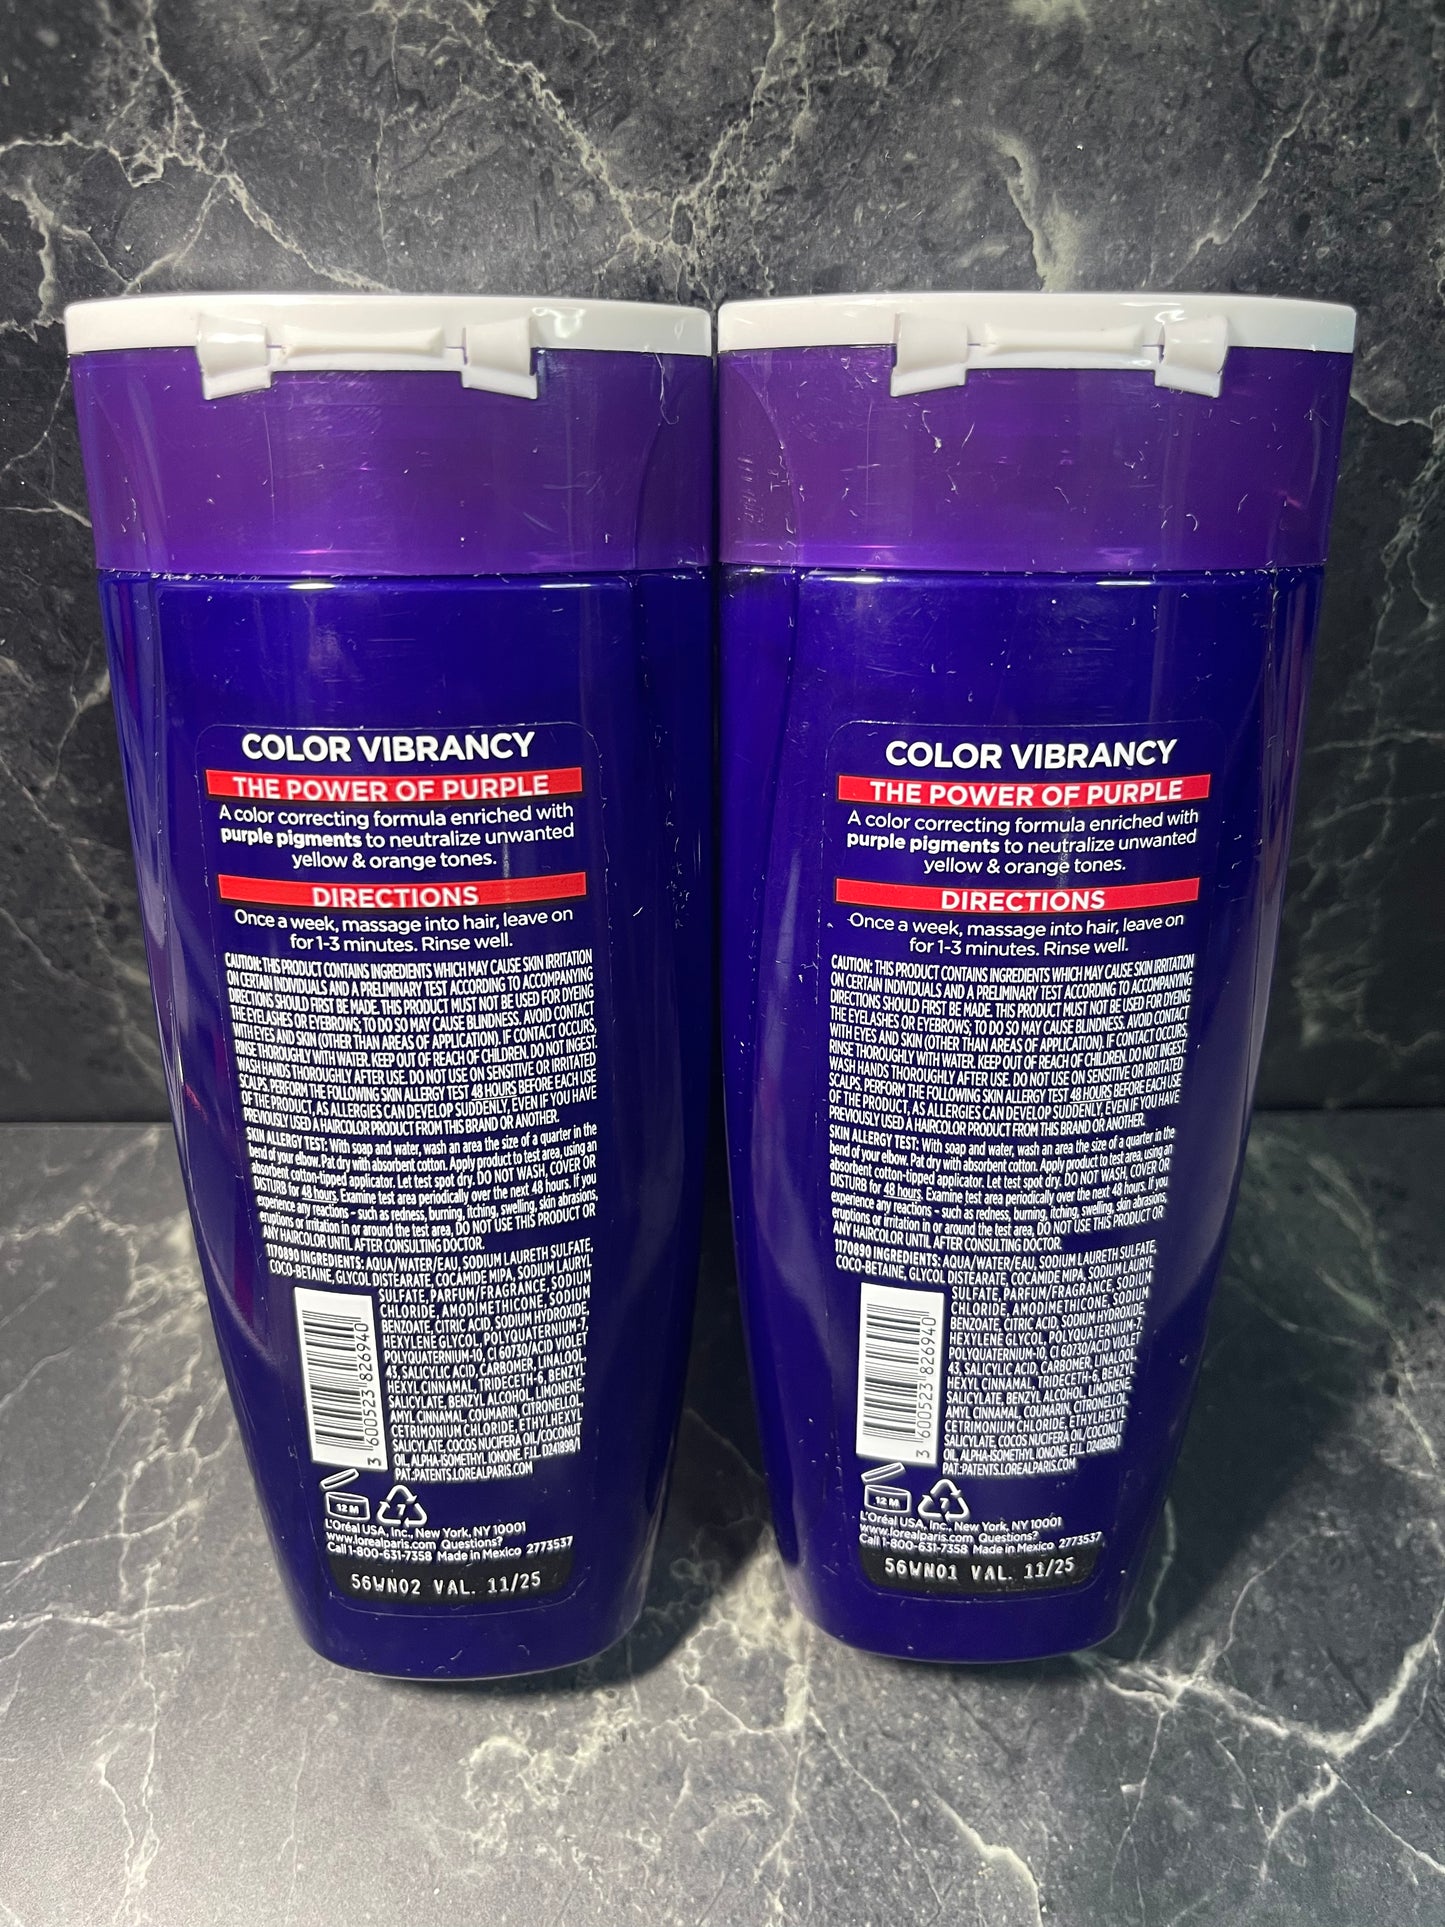 L'Oreal Paris Elvive Color Vibrancy Purple Shampoo Anti Brassiness 6.7oz, 2-Pack